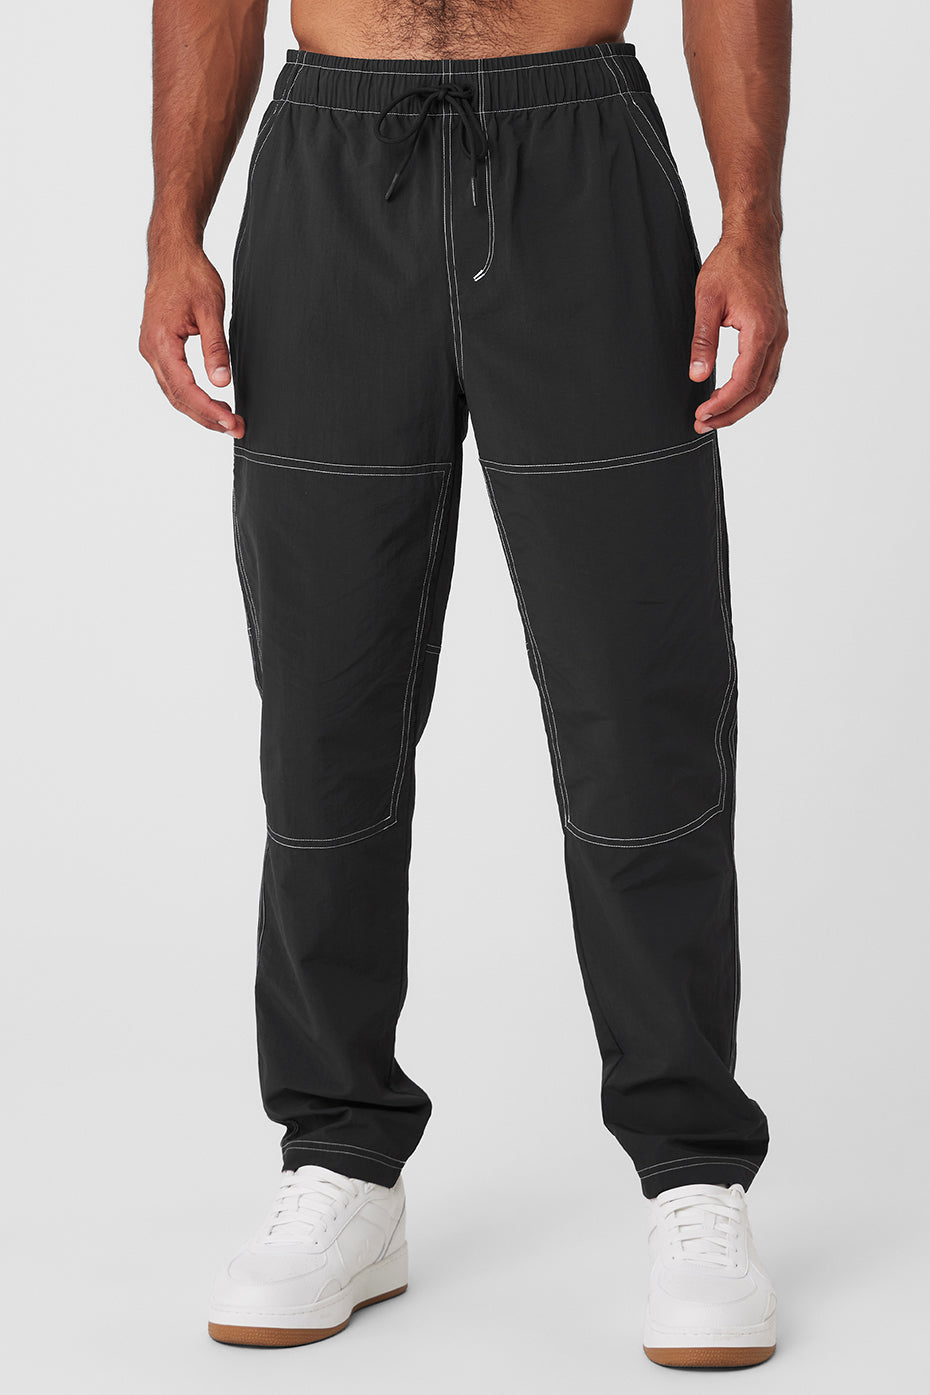  Alo Yoga mens Sweatpants, Black, XX-Large US : Sports & Outdoors